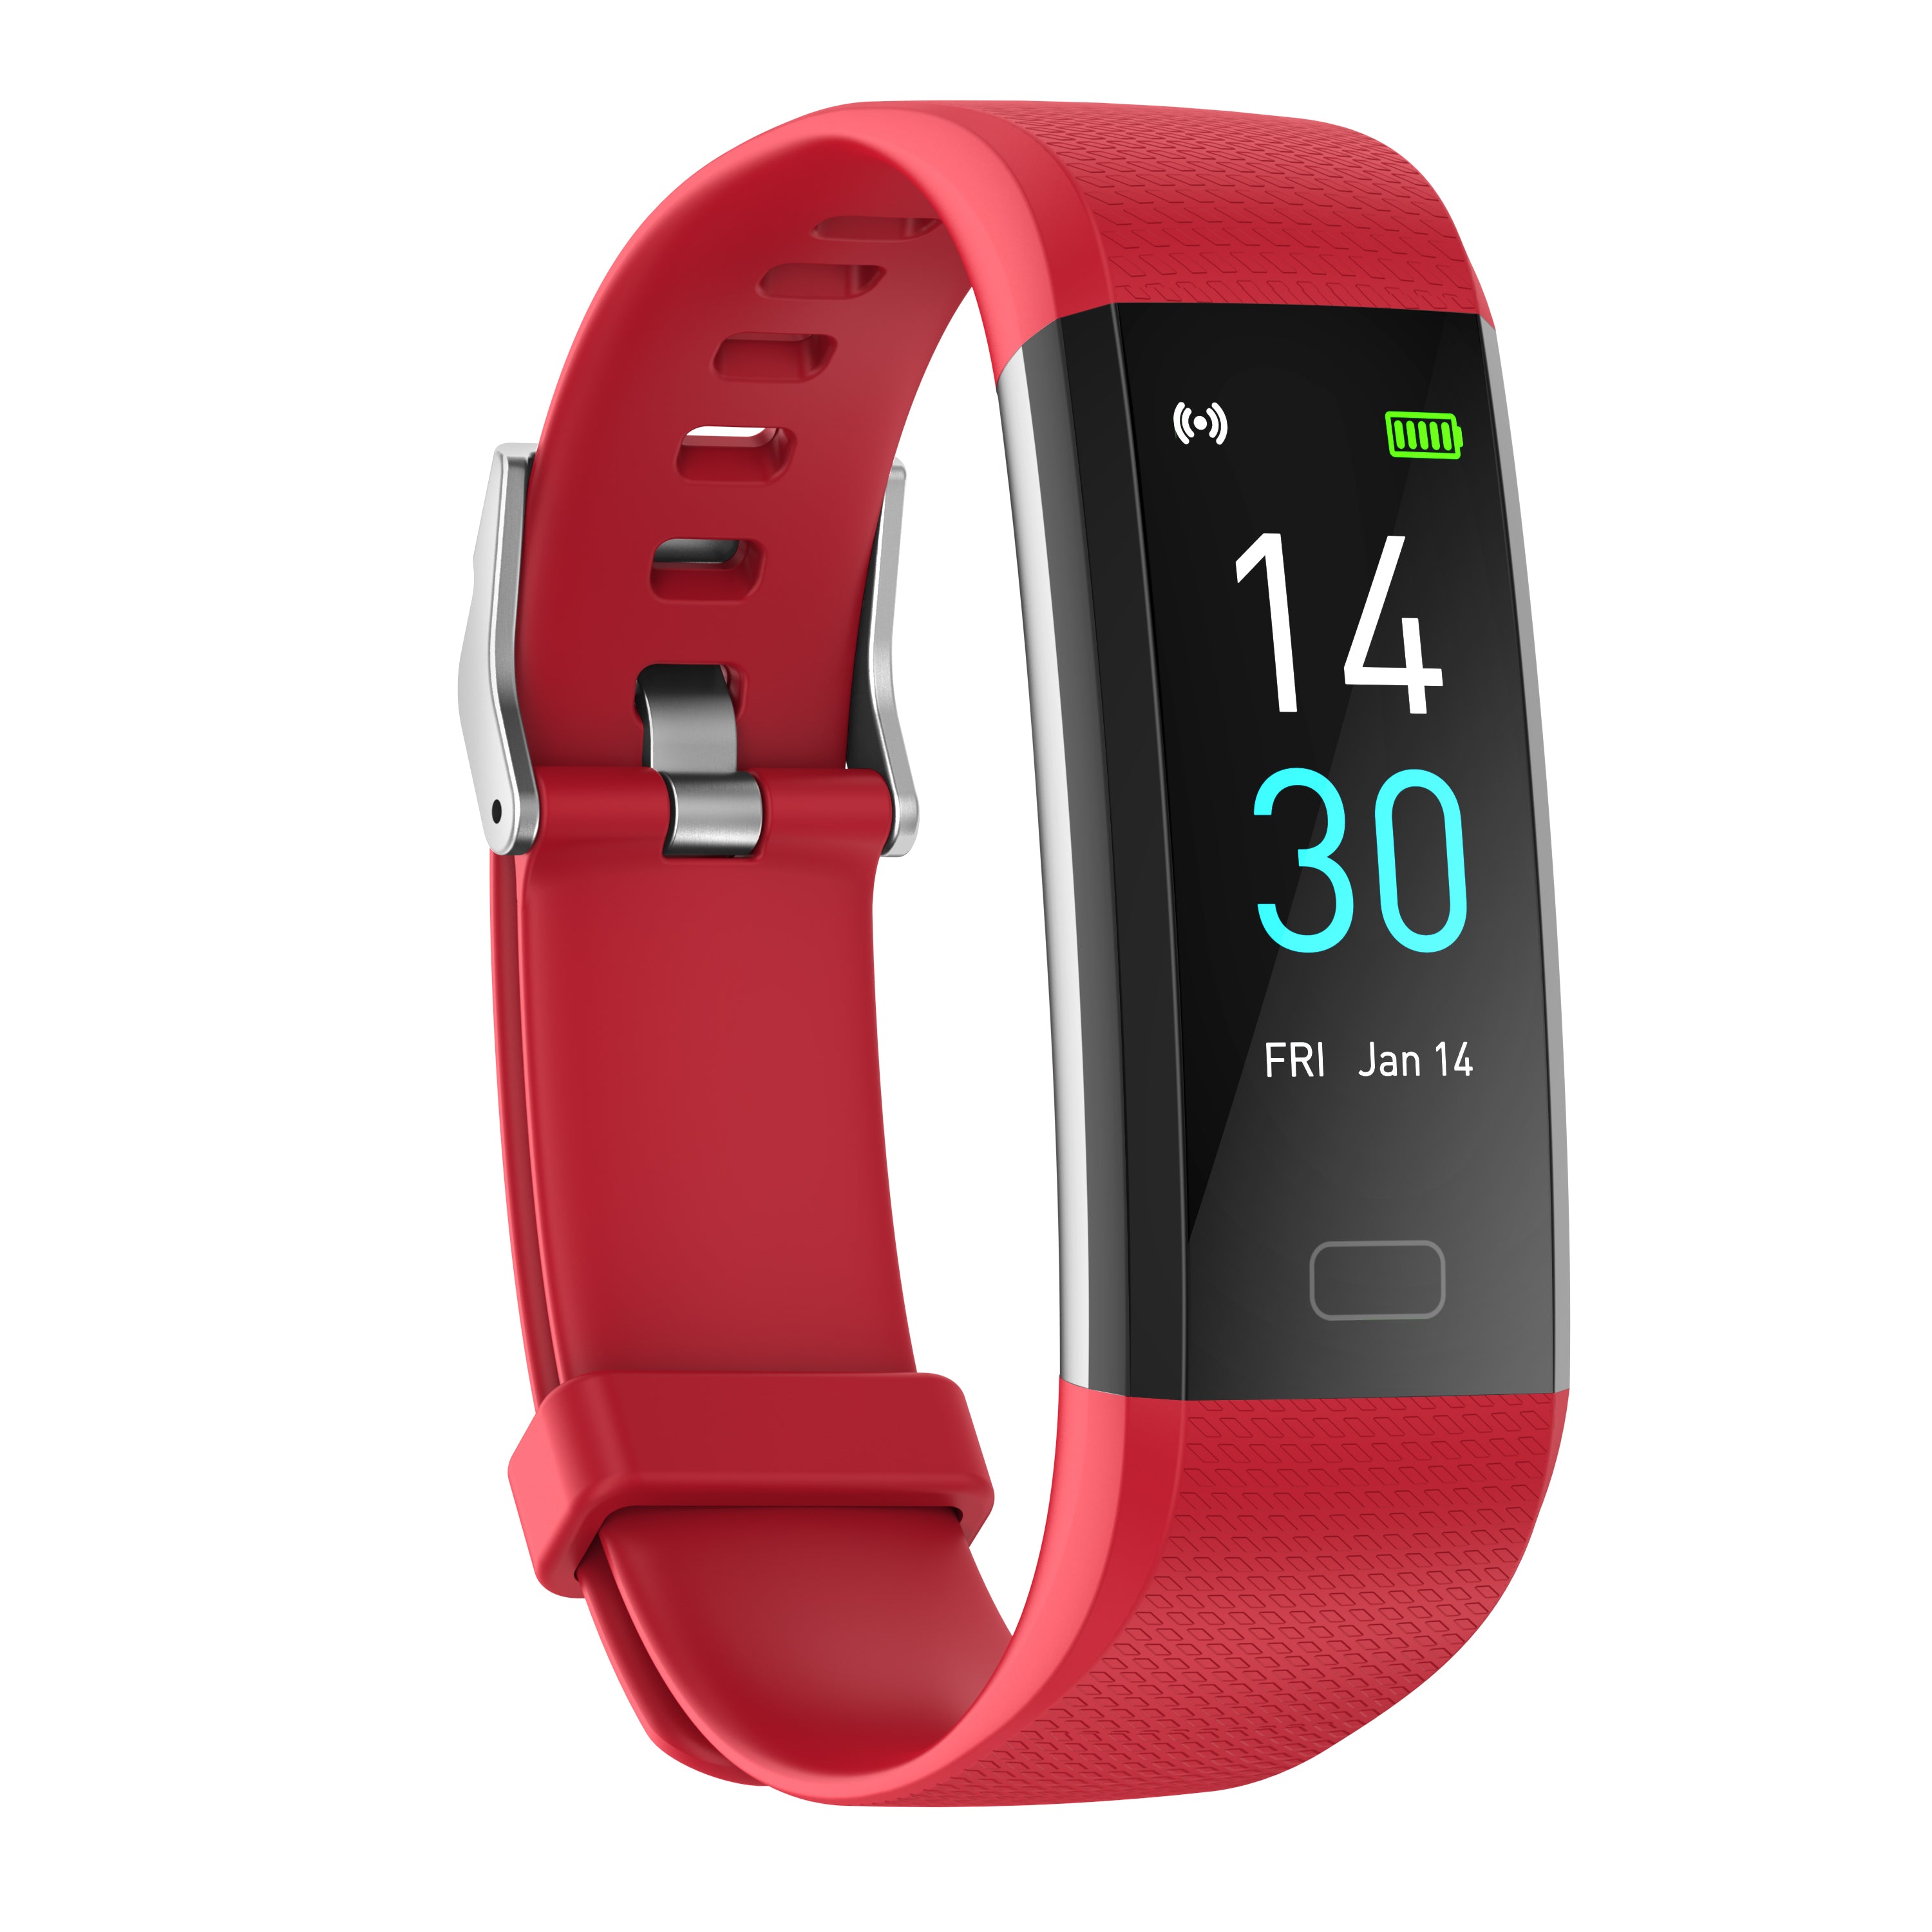 Wireless Mobile Technology stylish Smart watch for women.